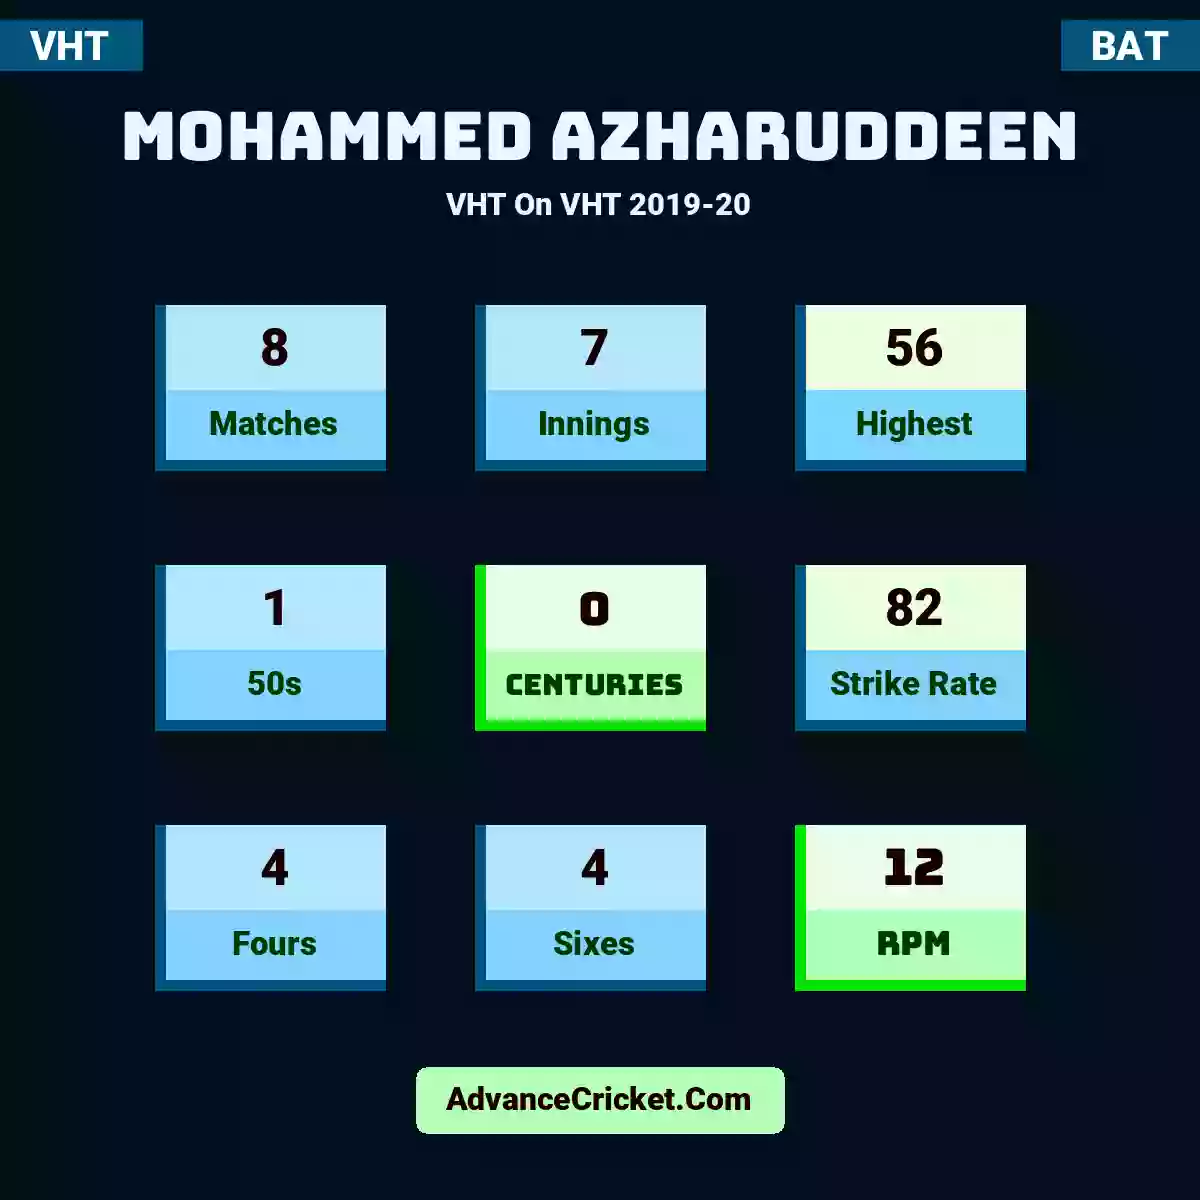 Mohammed Azharuddeen VHT  On VHT 2019-20, Mohammed Azharuddeen played 8 matches, scored 56 runs as highest, 1 half-centuries, and 0 centuries, with a strike rate of 82. M.Azharuddeen hit 4 fours and 4 sixes, with an RPM of 12.